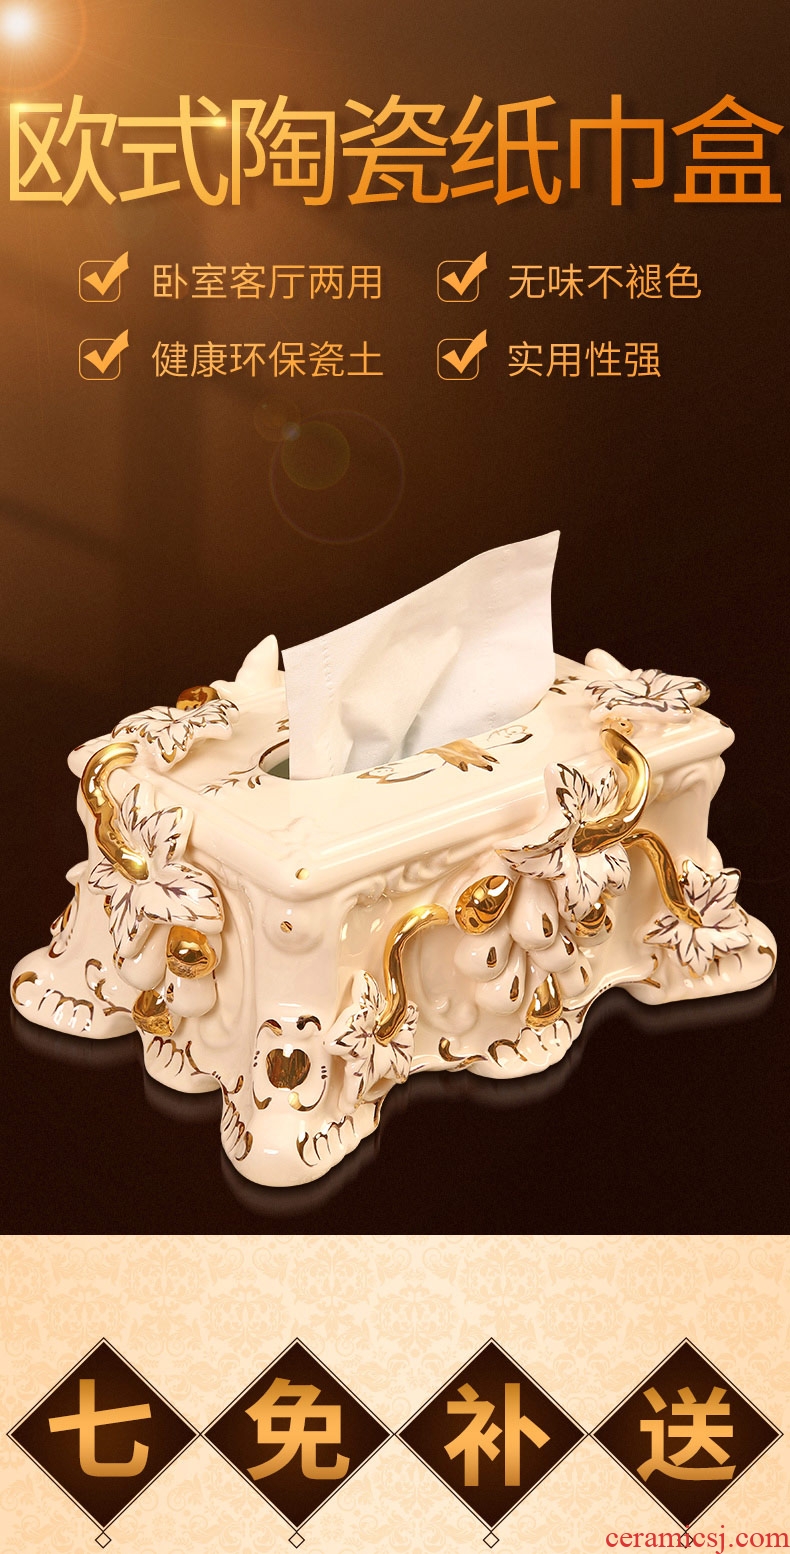 Vatican Sally's ceramic tissue box luxury european-style household smoke box sitting room tea table decorations furnishing articles wedding gift